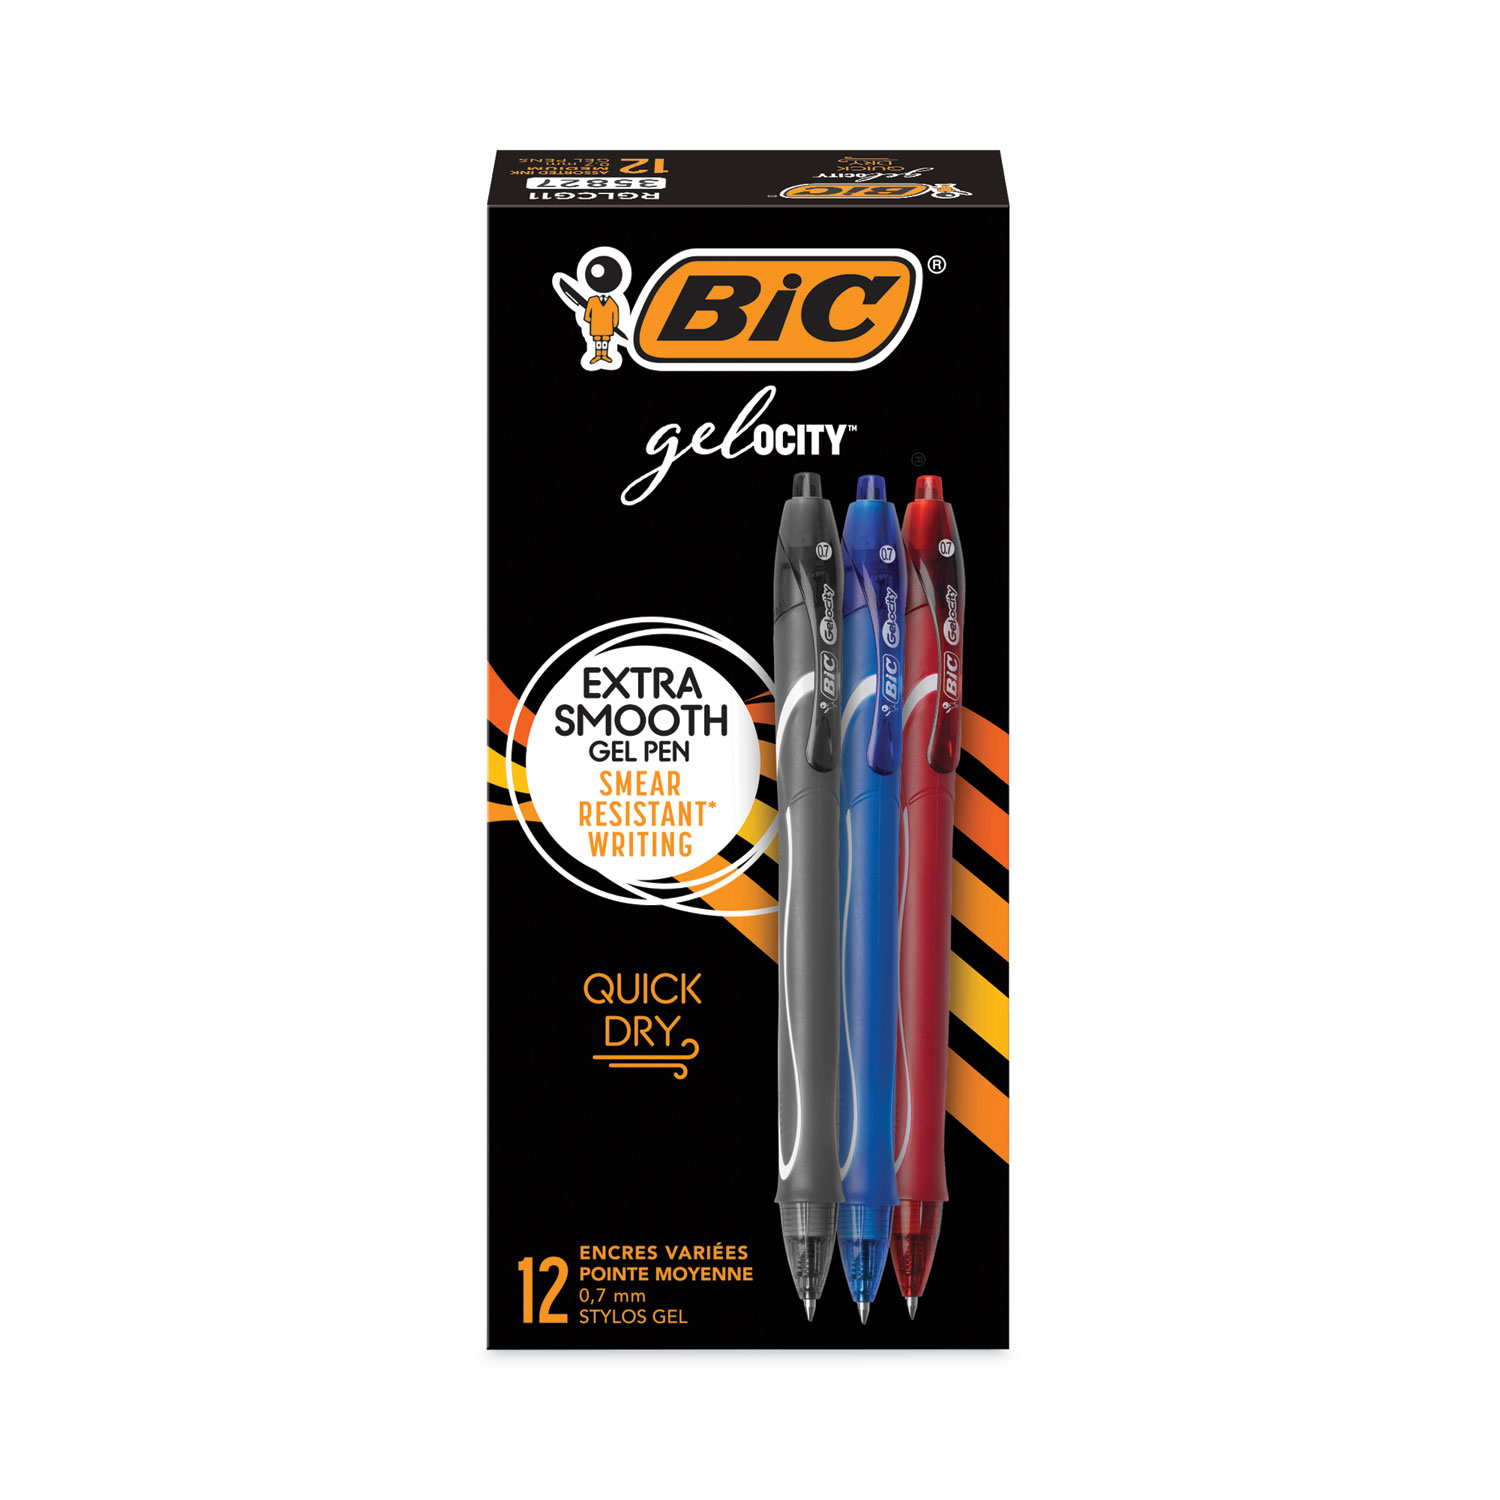 Gel-ocity Quick Dry Gel Pen, Retractable, Fine 0.7 mm, Three